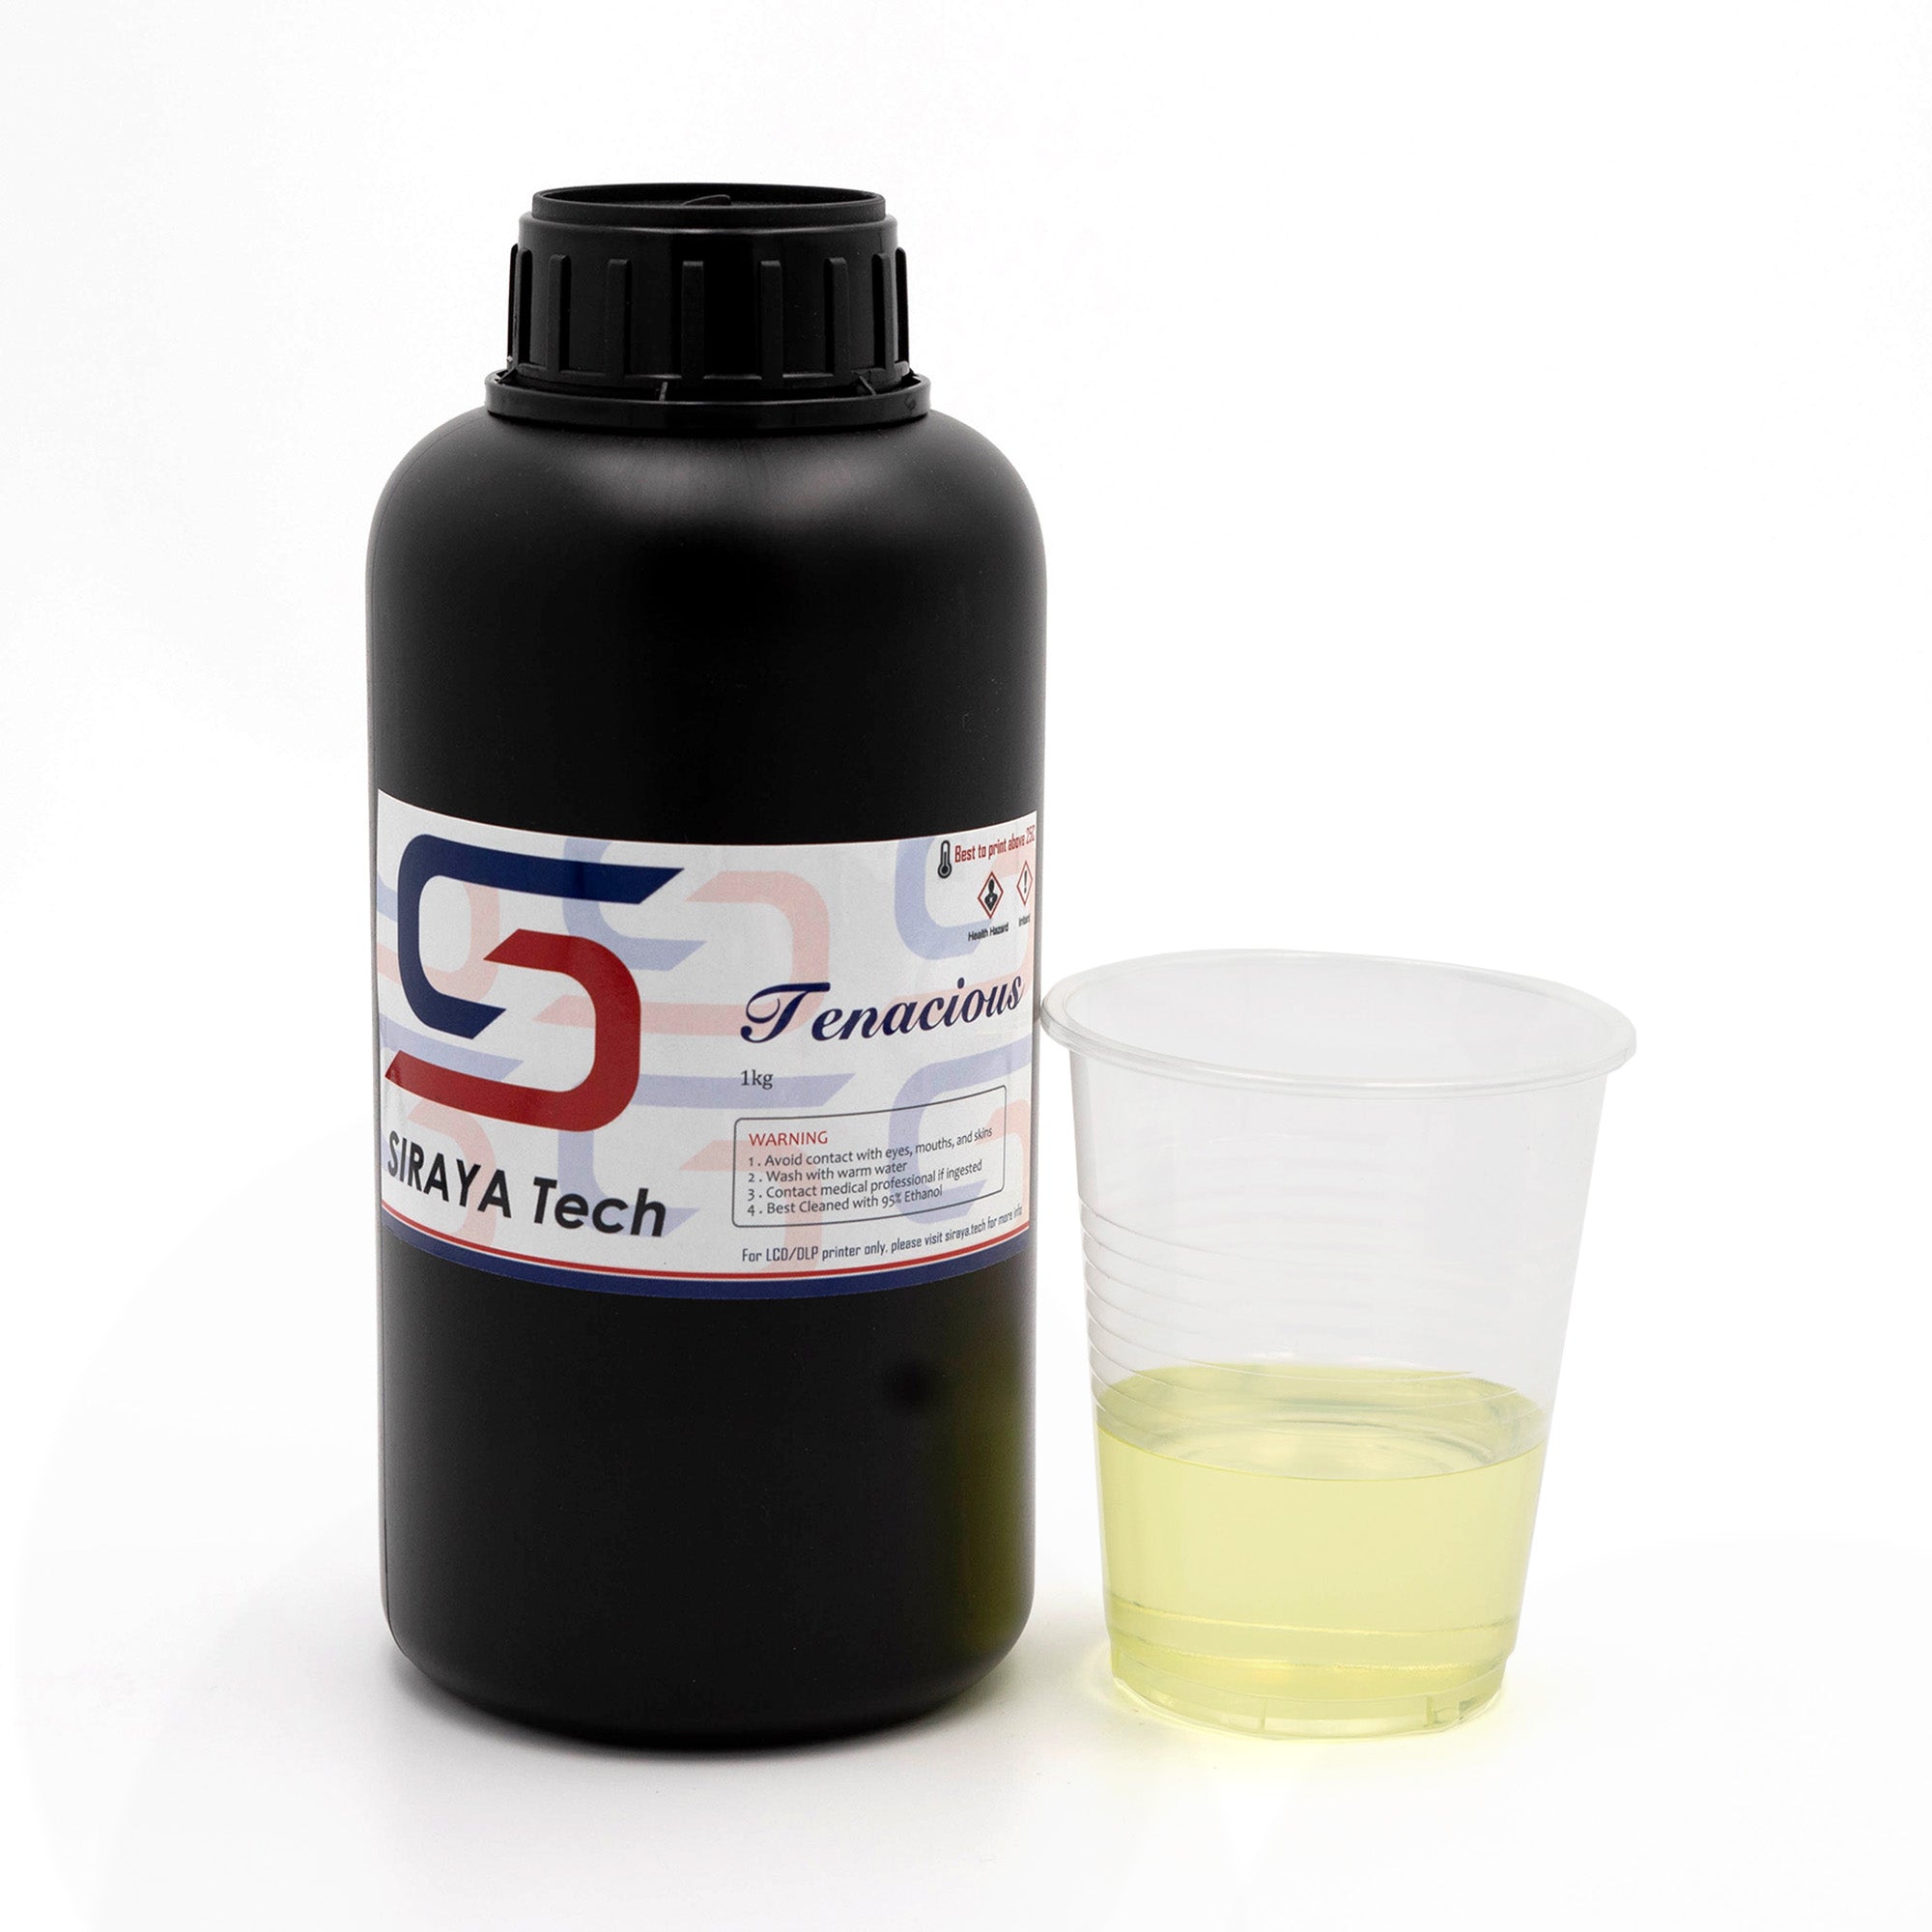 Tenacious Clear by Siraya Tech - Flexible resin (1KG)